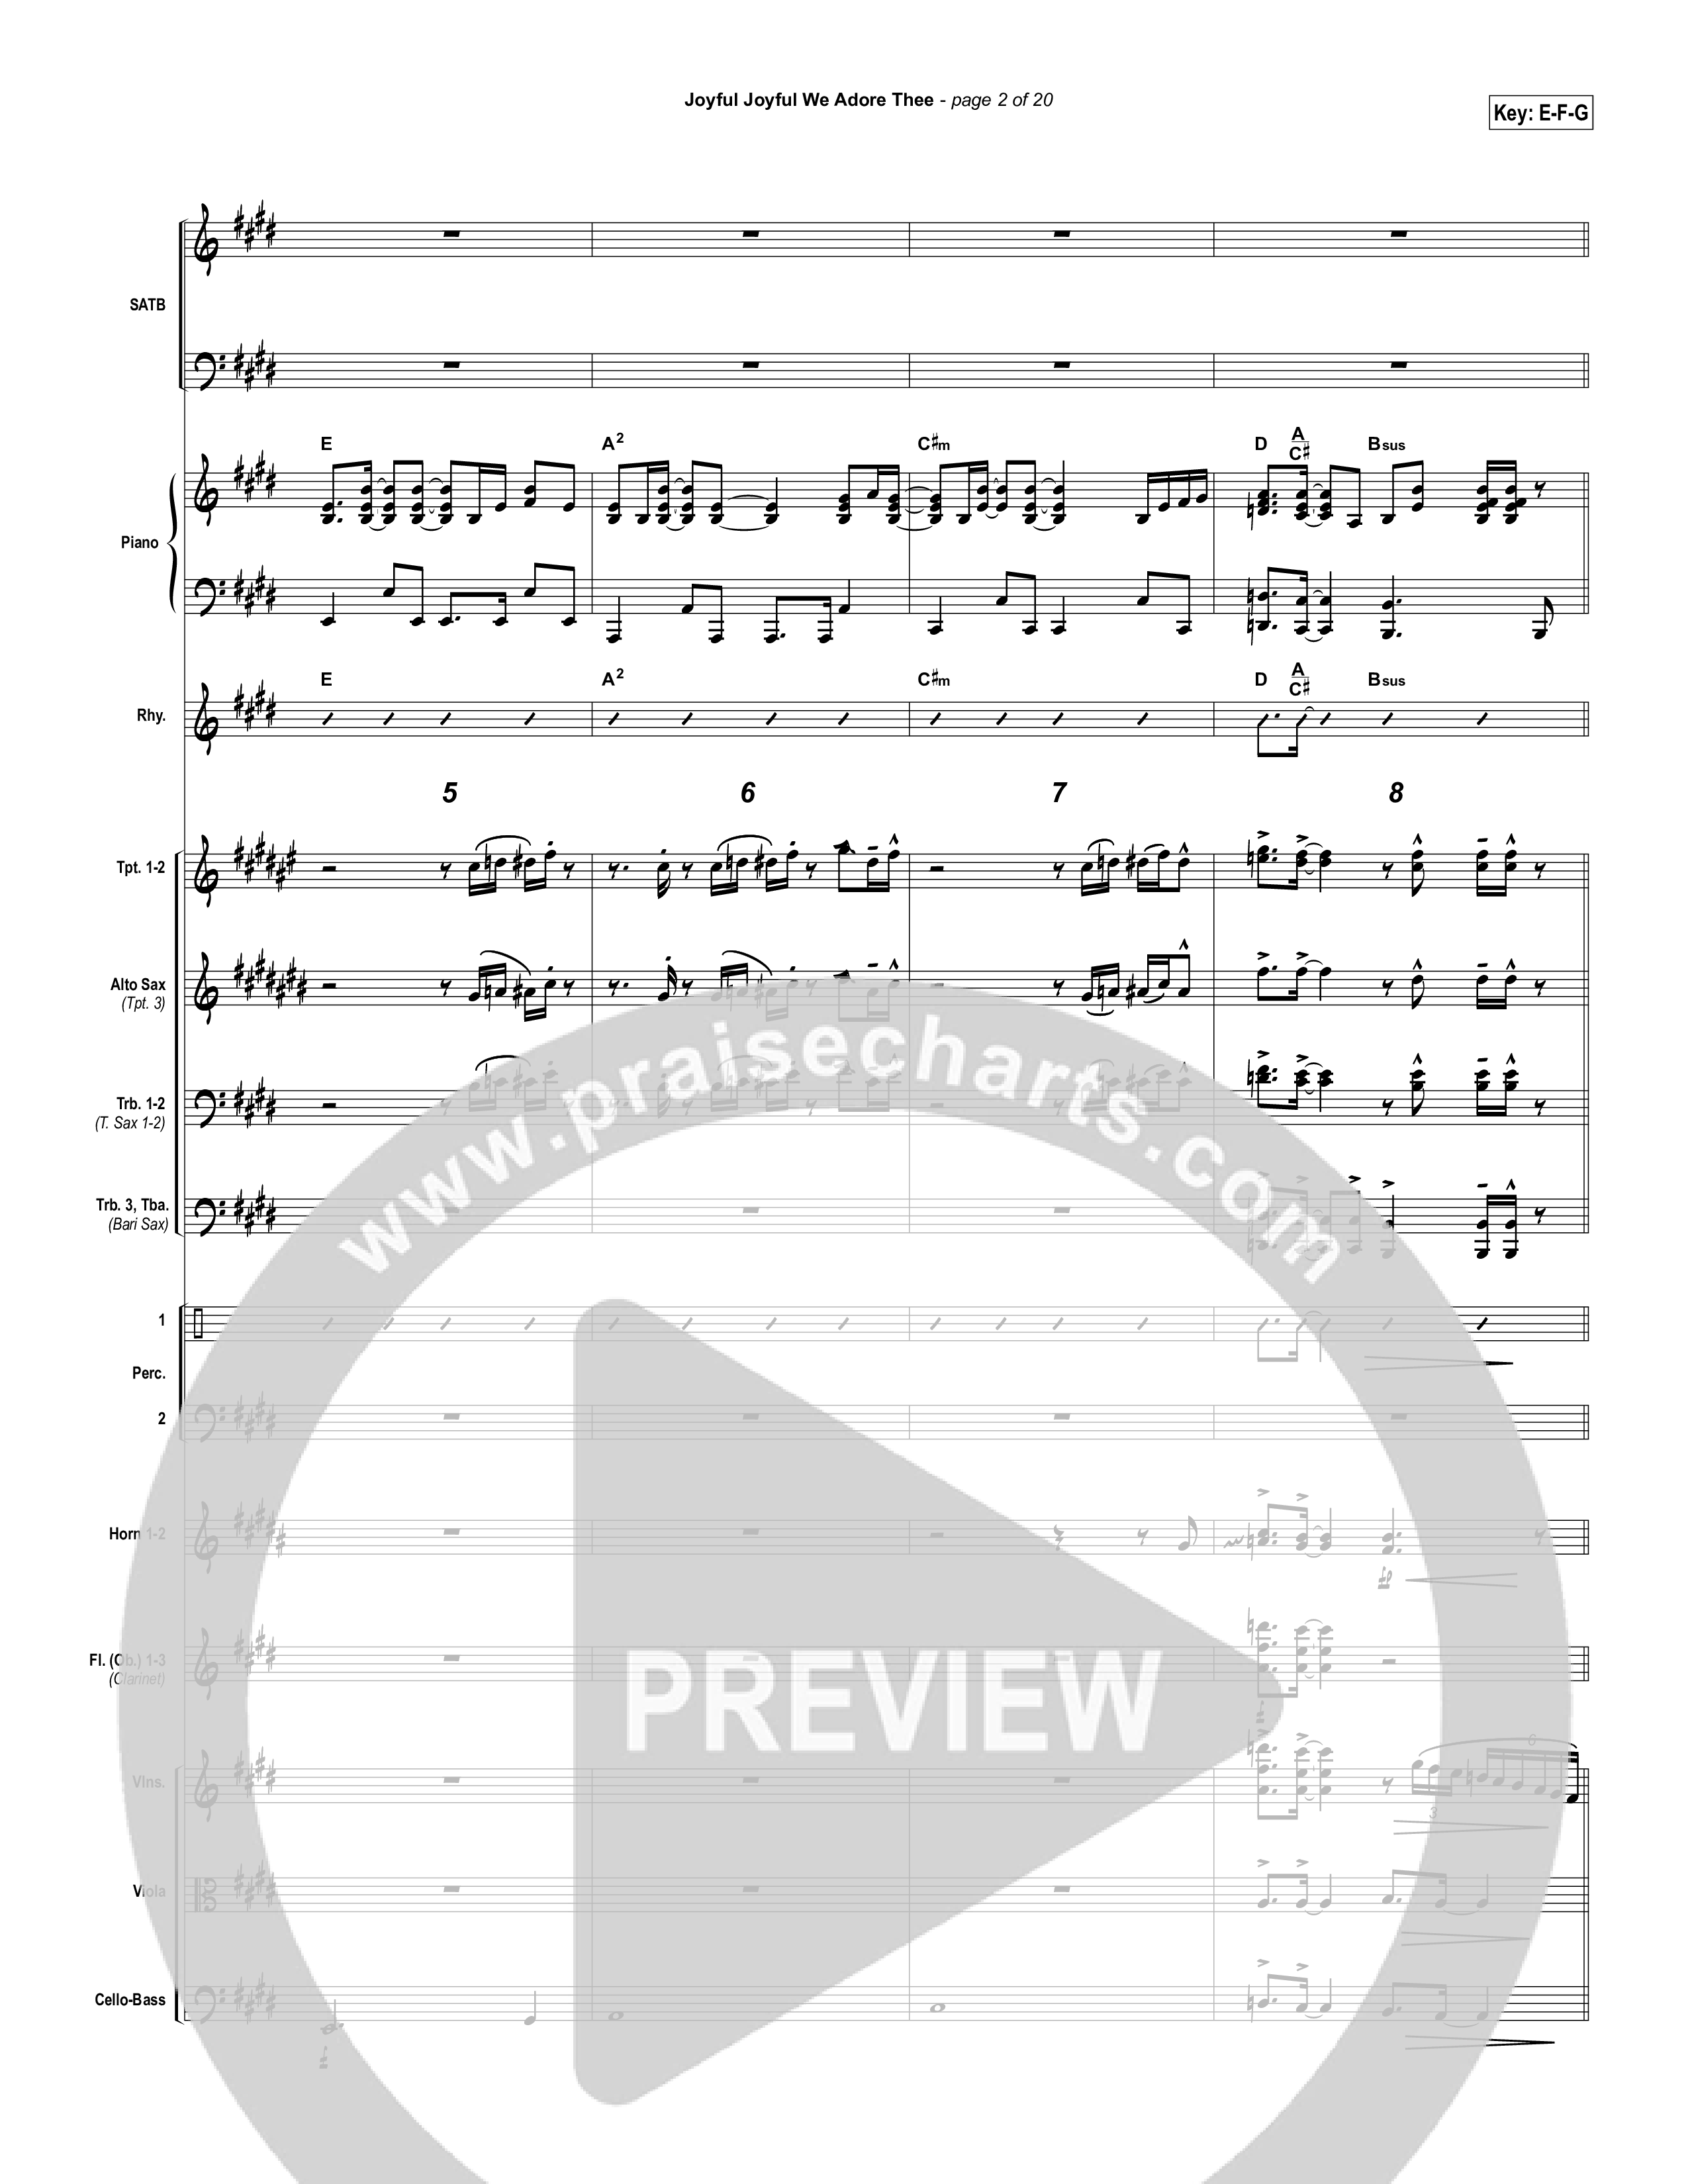 Joyful Joyful We Adore Thee Conductor's Score (PraiseCharts Band / Arr. Daniel Galbraith)